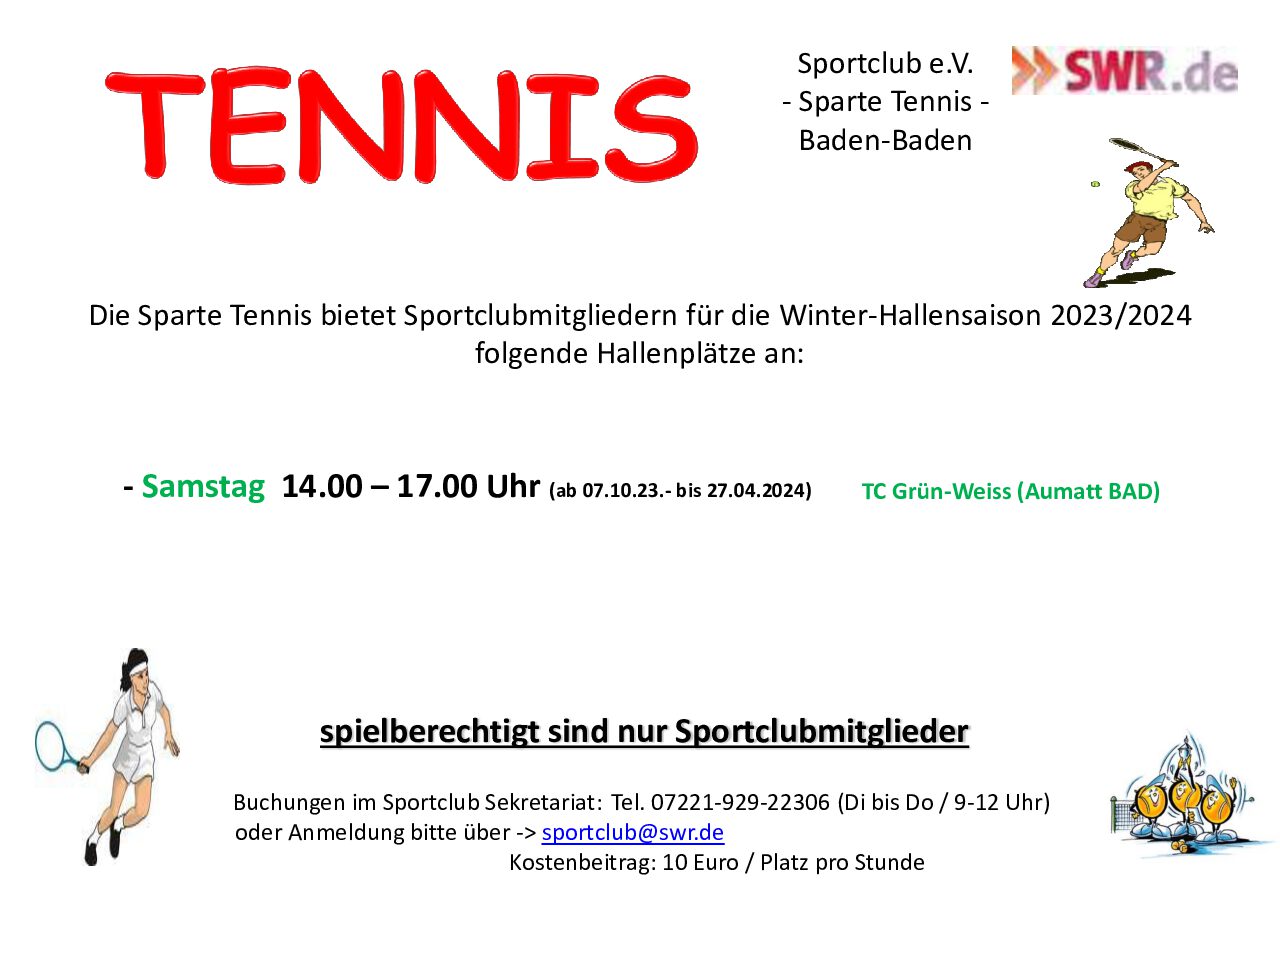 Tennis – Winter/Hallensaison in Baden-Baden 2023/2024